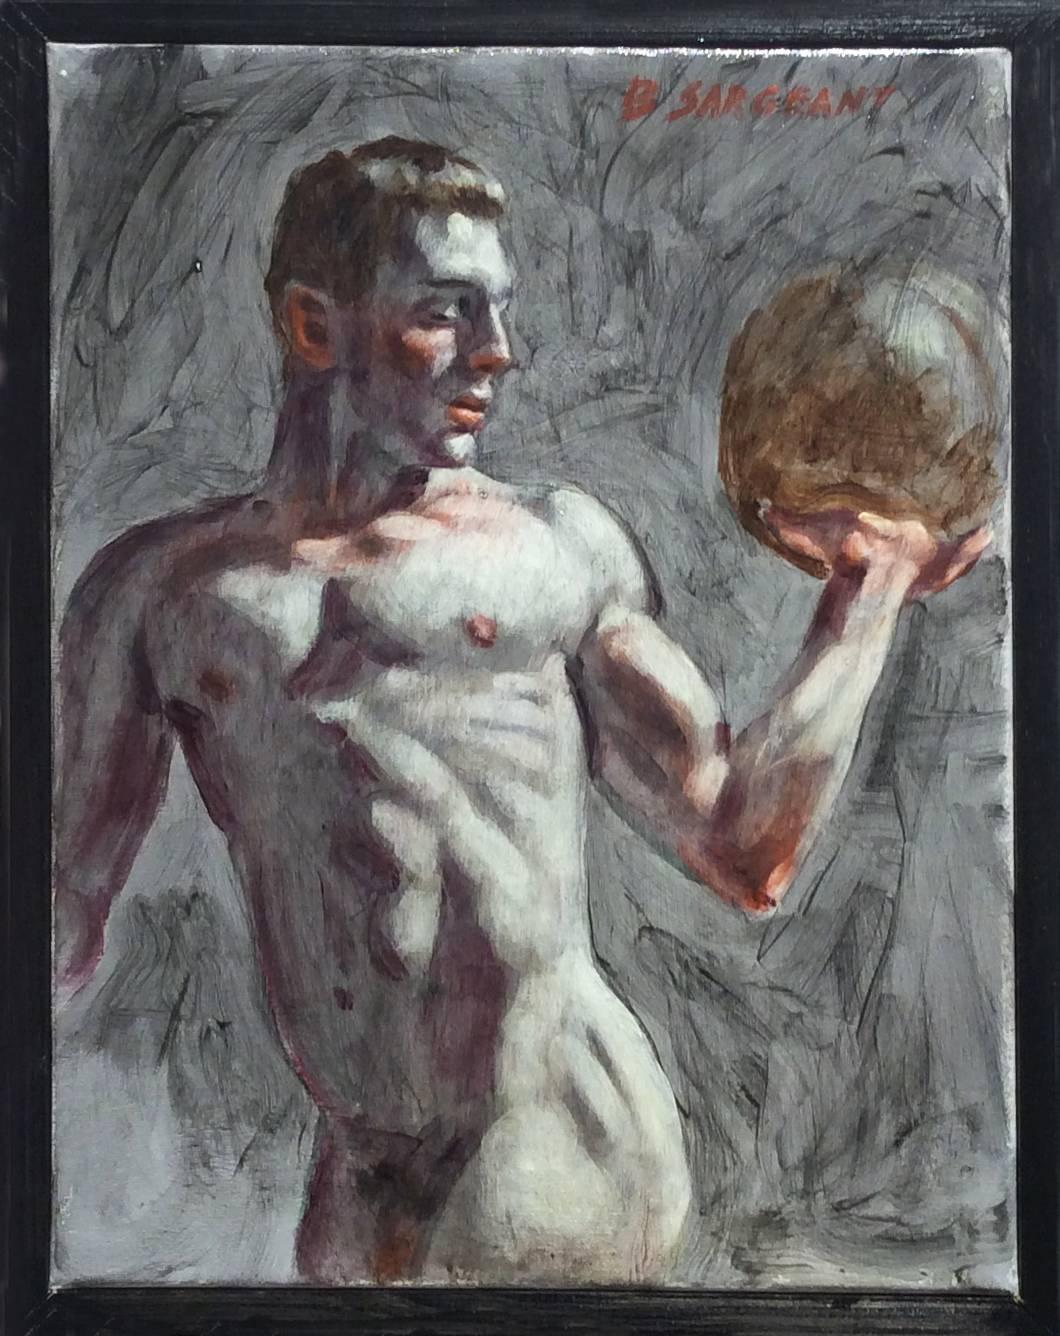 Mark Beard Figurative Painting - Athlete in the Nude (Figurative Oil Painting of Muscular Athlete with Shot Put)